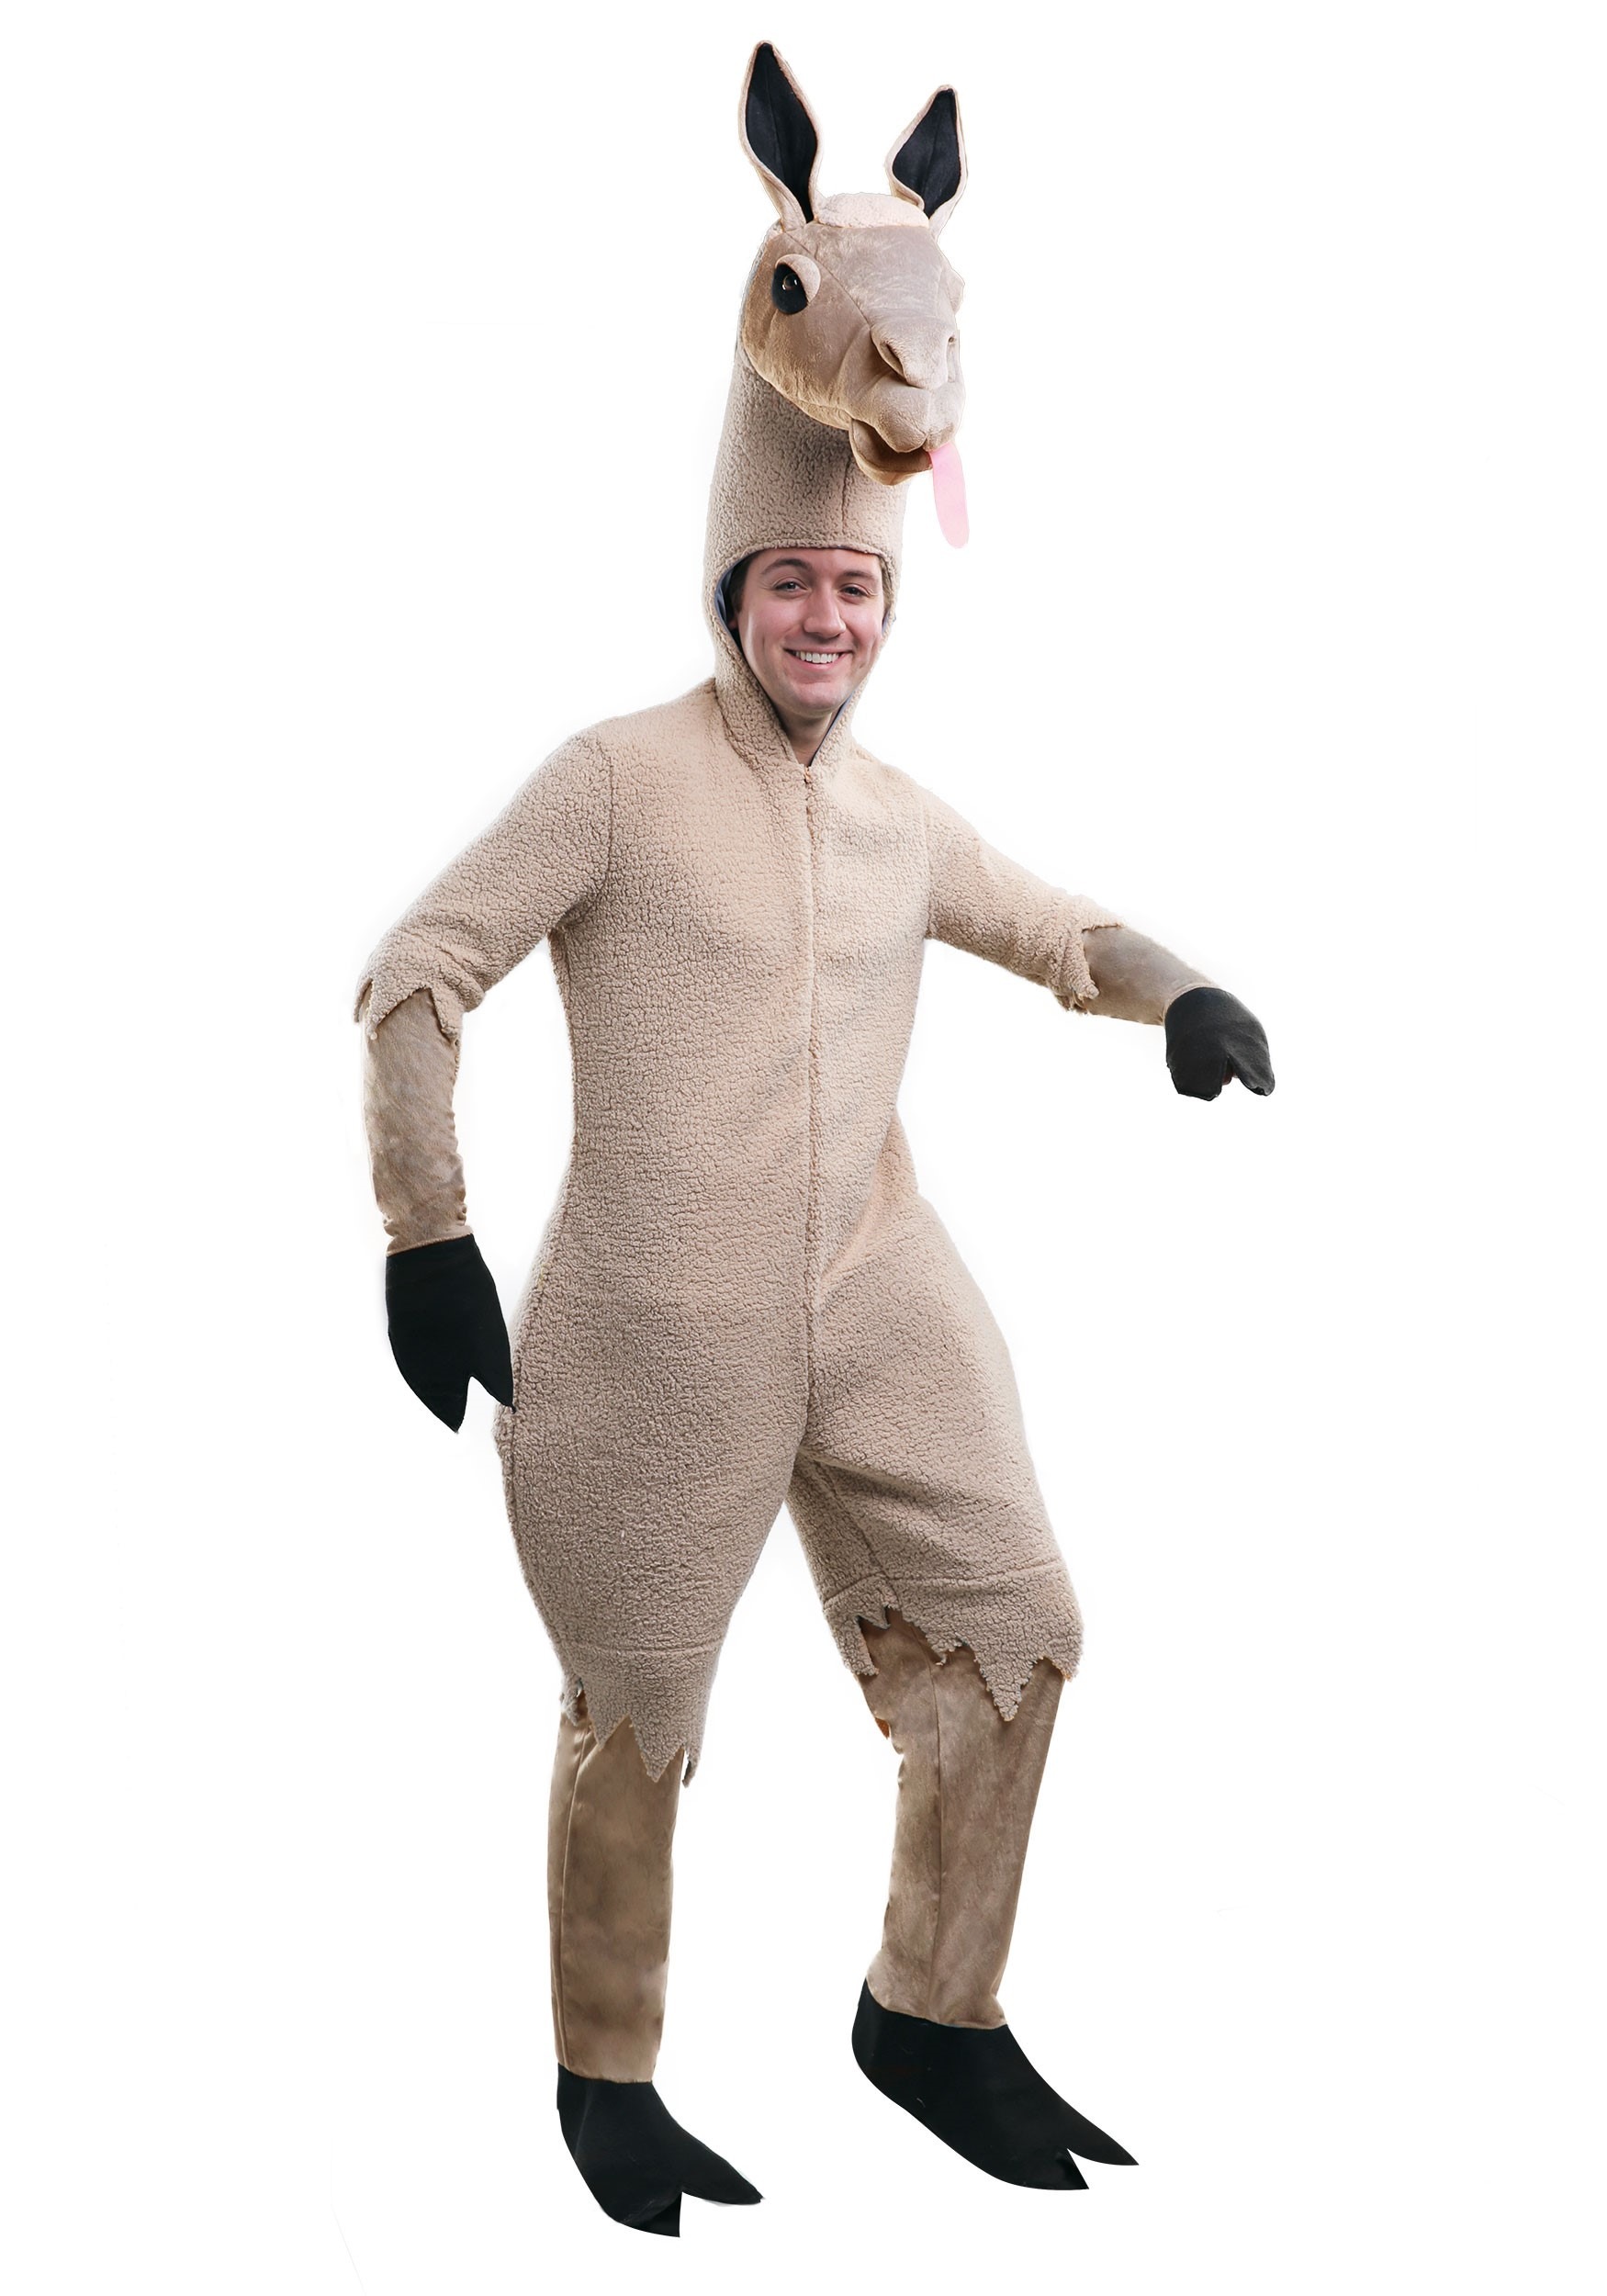 Llama Costume for Adults